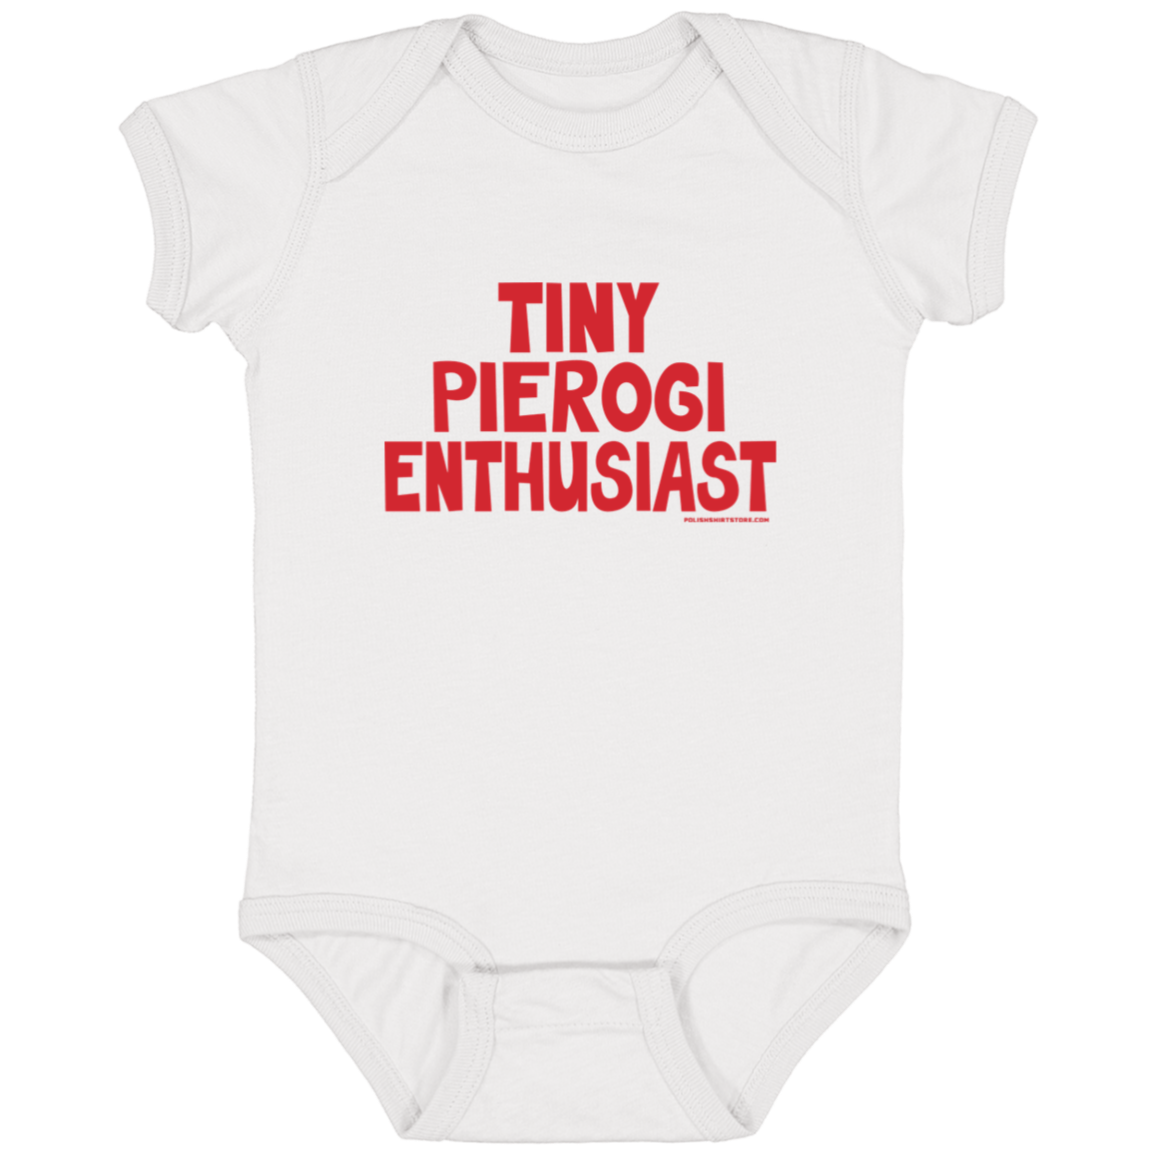 Tiny Pierogi Enthusiast Infant Bodysuit Baby CustomCat White Newborn 